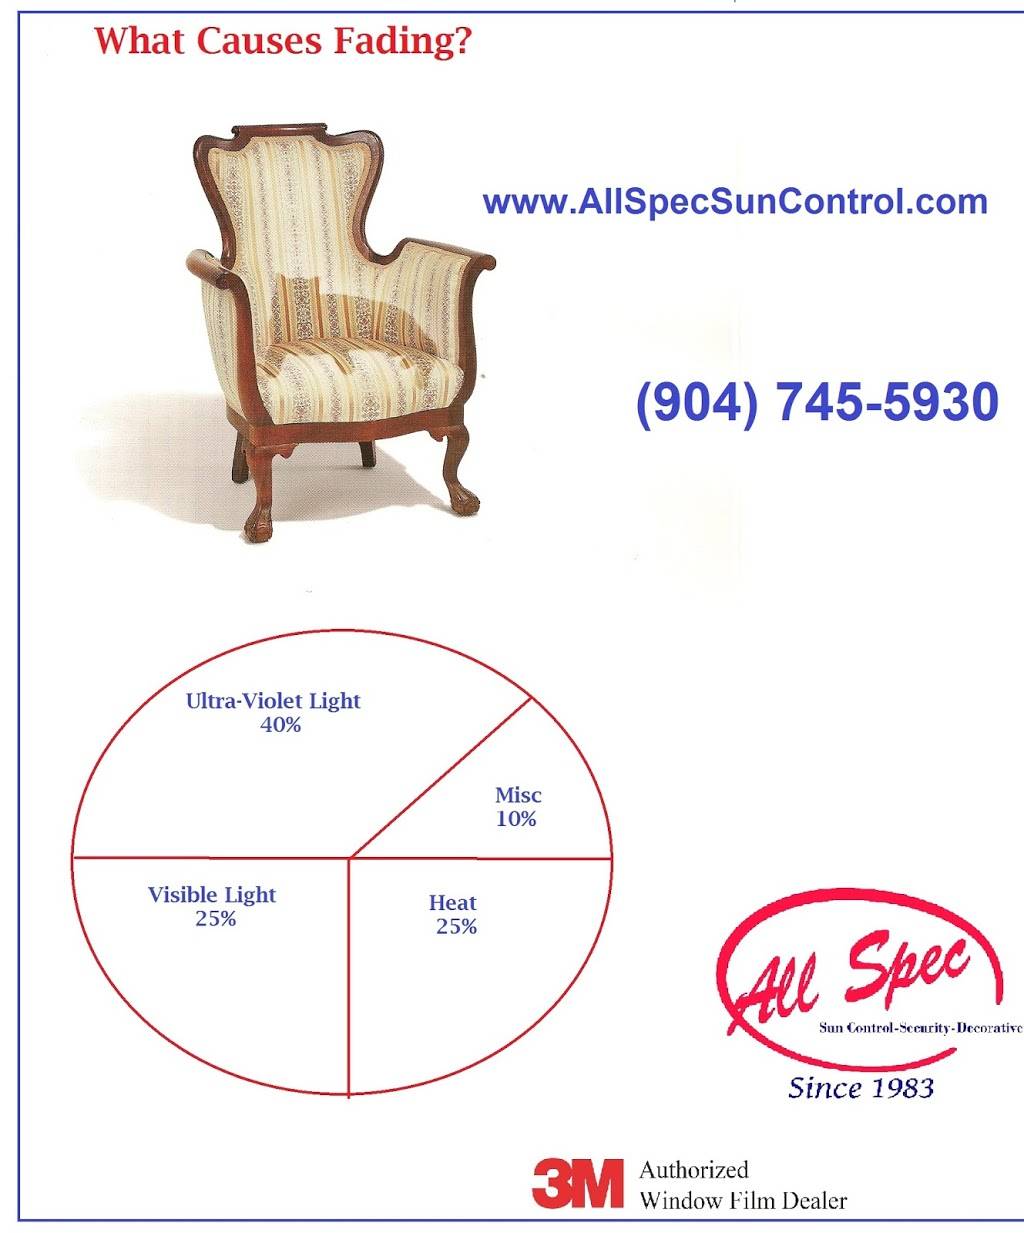 All Spec Sun Control | 4, 2881, 610 Lane Ave N, Jacksonville, FL 32254 | Phone: (904) 745-5930